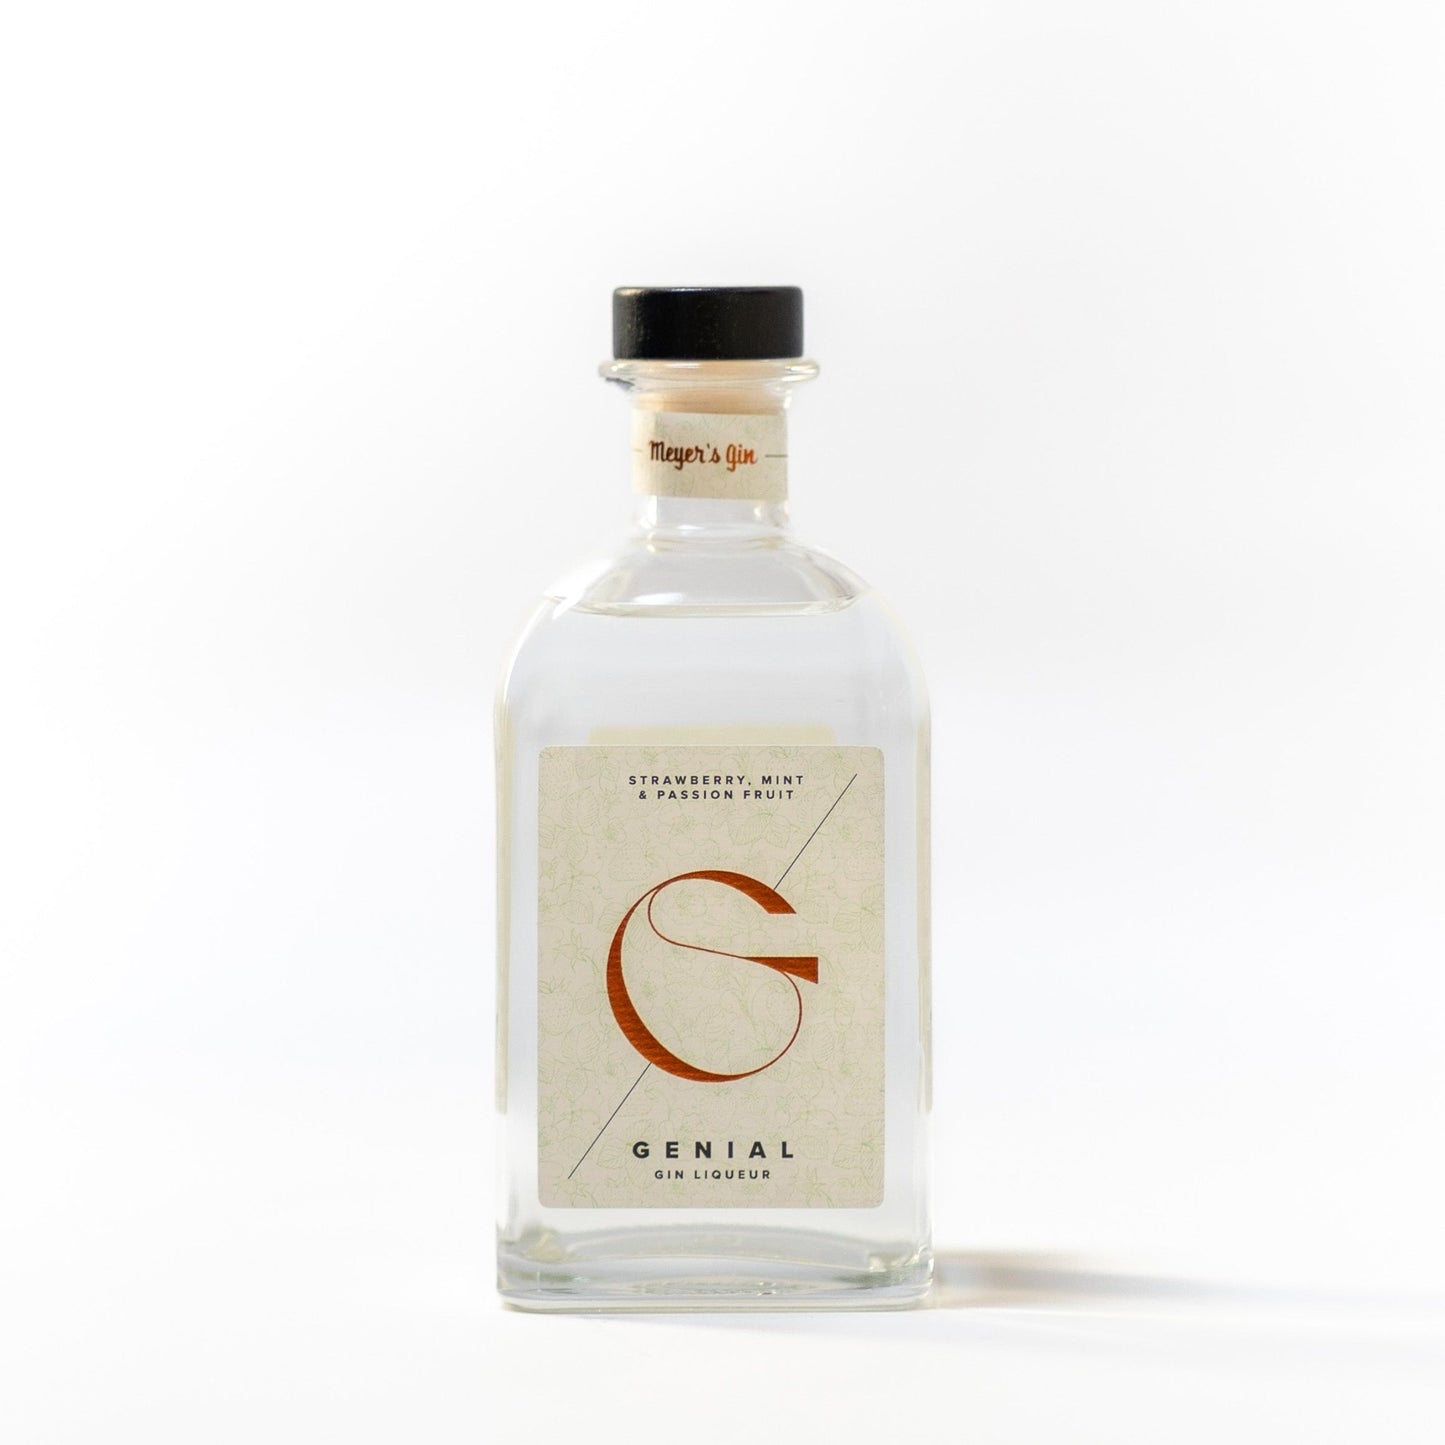 Meyer's Gin Genial - The Spirits Valley